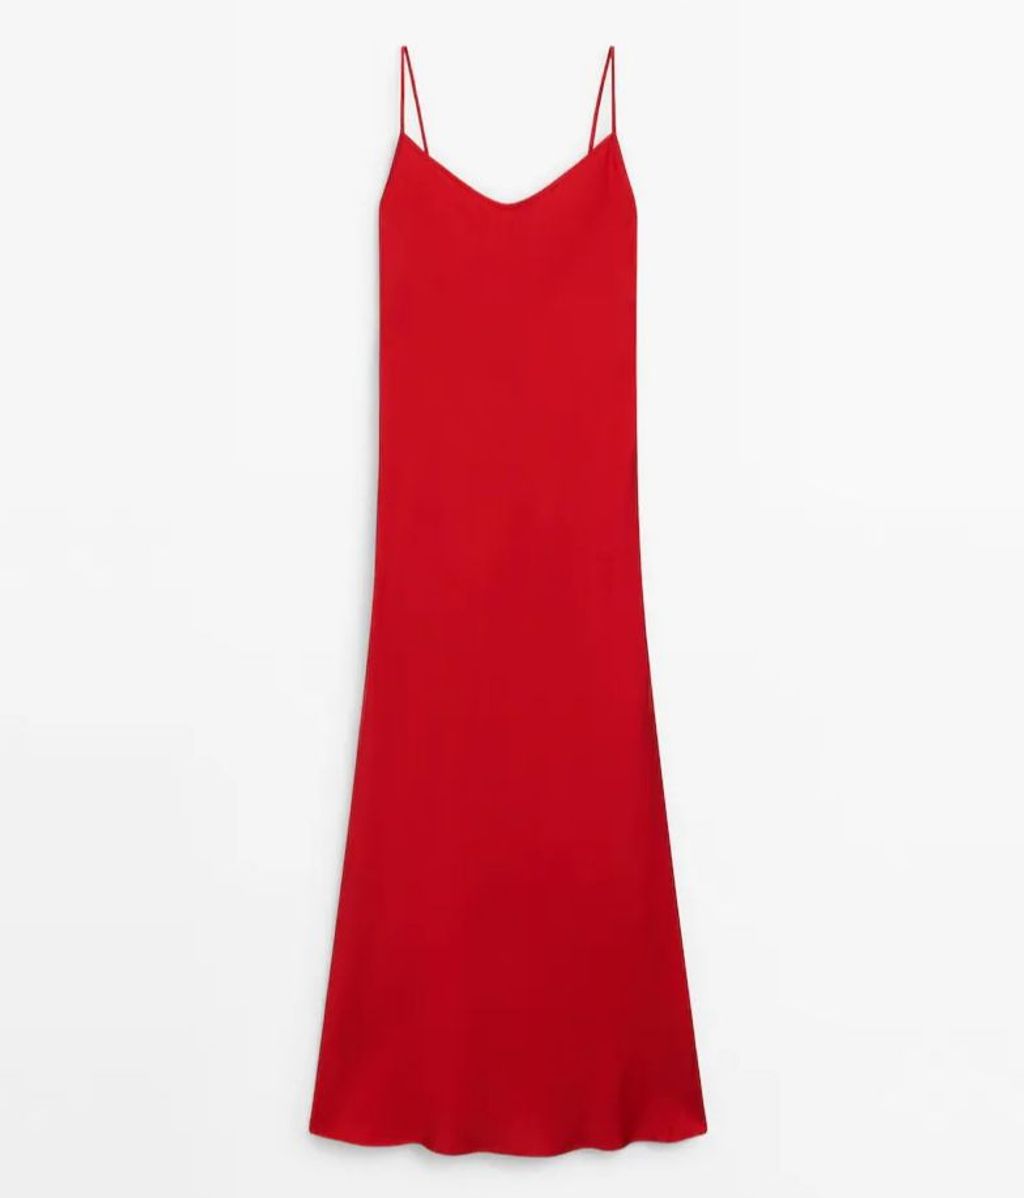 Vestido rojo lencero de Massimo Dutti